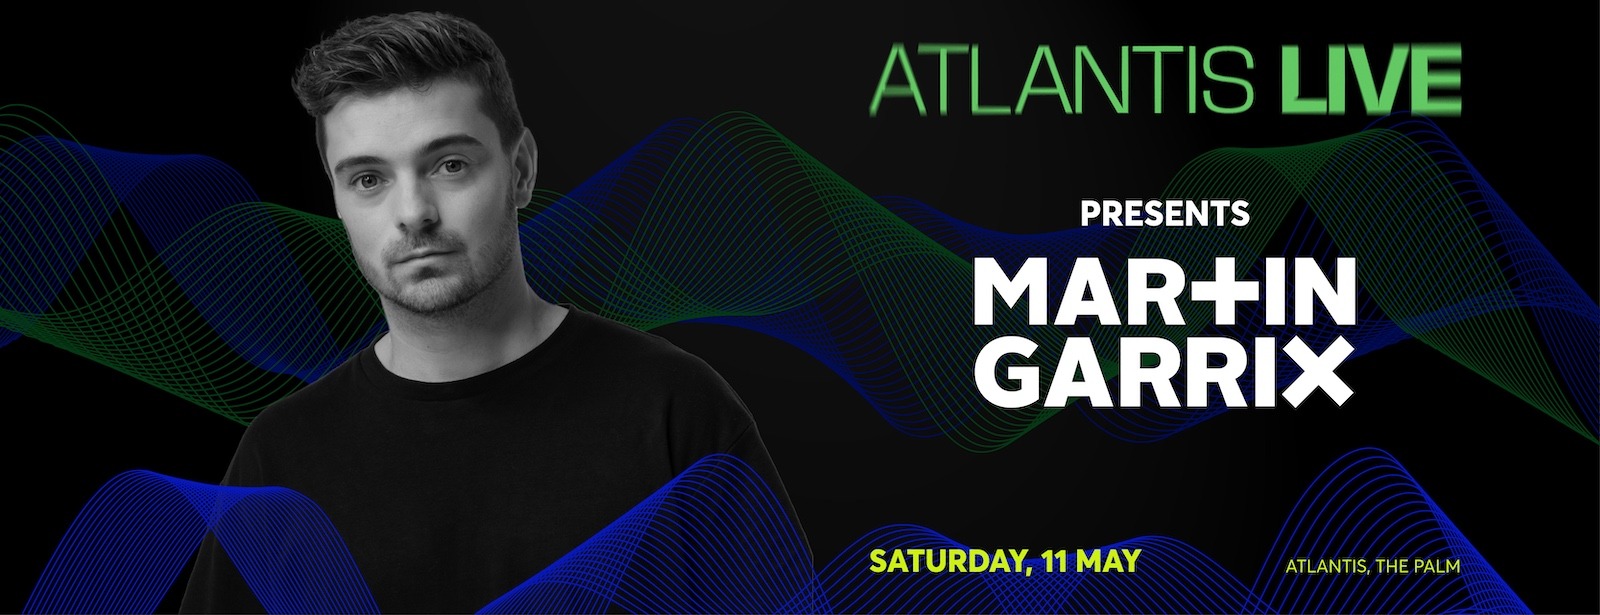 ATLANTIS LIVE presents Martin Garrix - Coming Soon in UAE